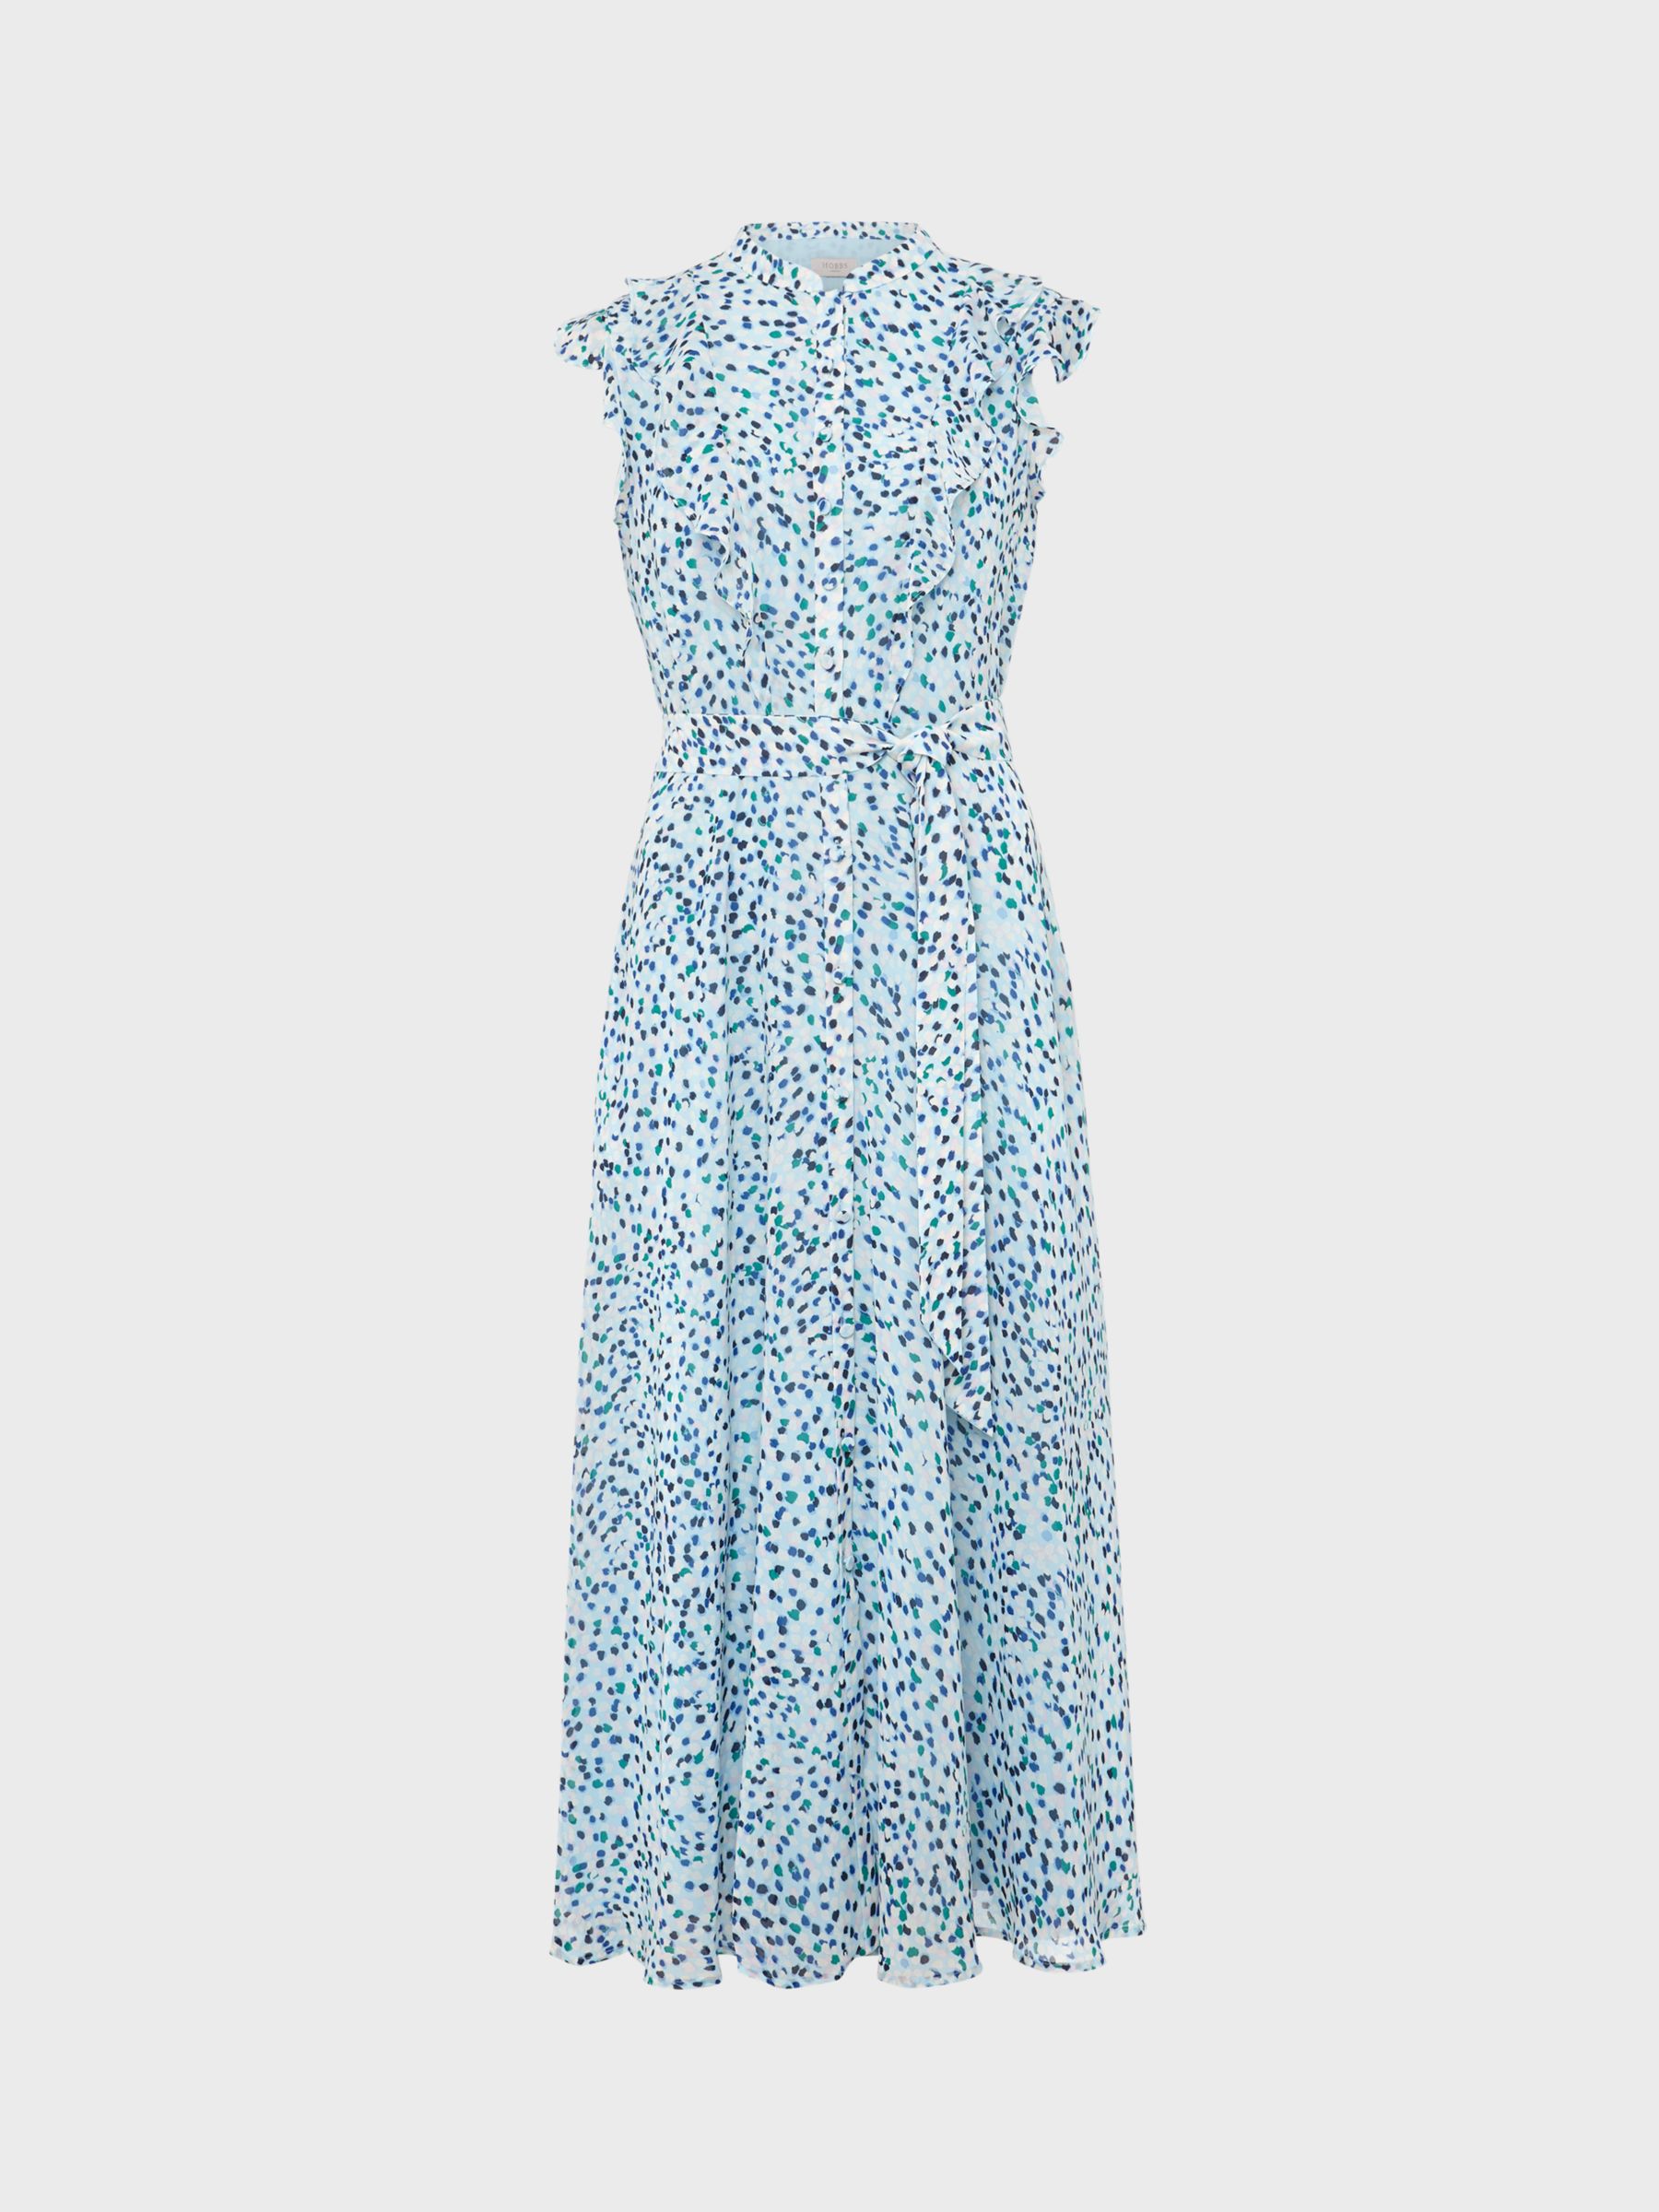 Hobbs Georgiana Abstract Print Belted Midi Dress, Blue/Multi, 14